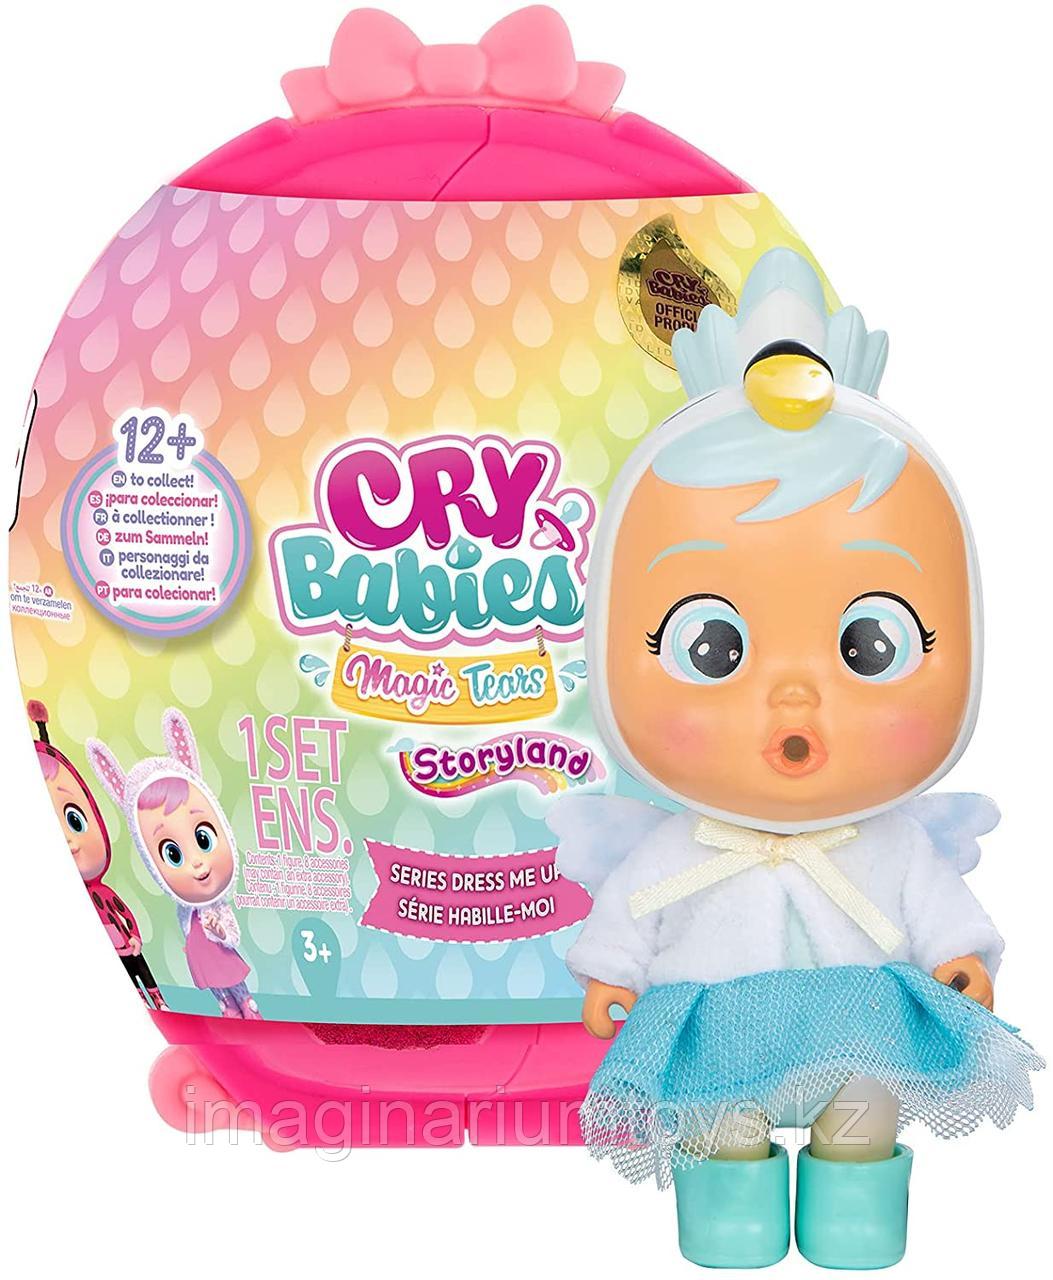 Cry Babies мини плачущие куклы Край Беби серия Dress me up